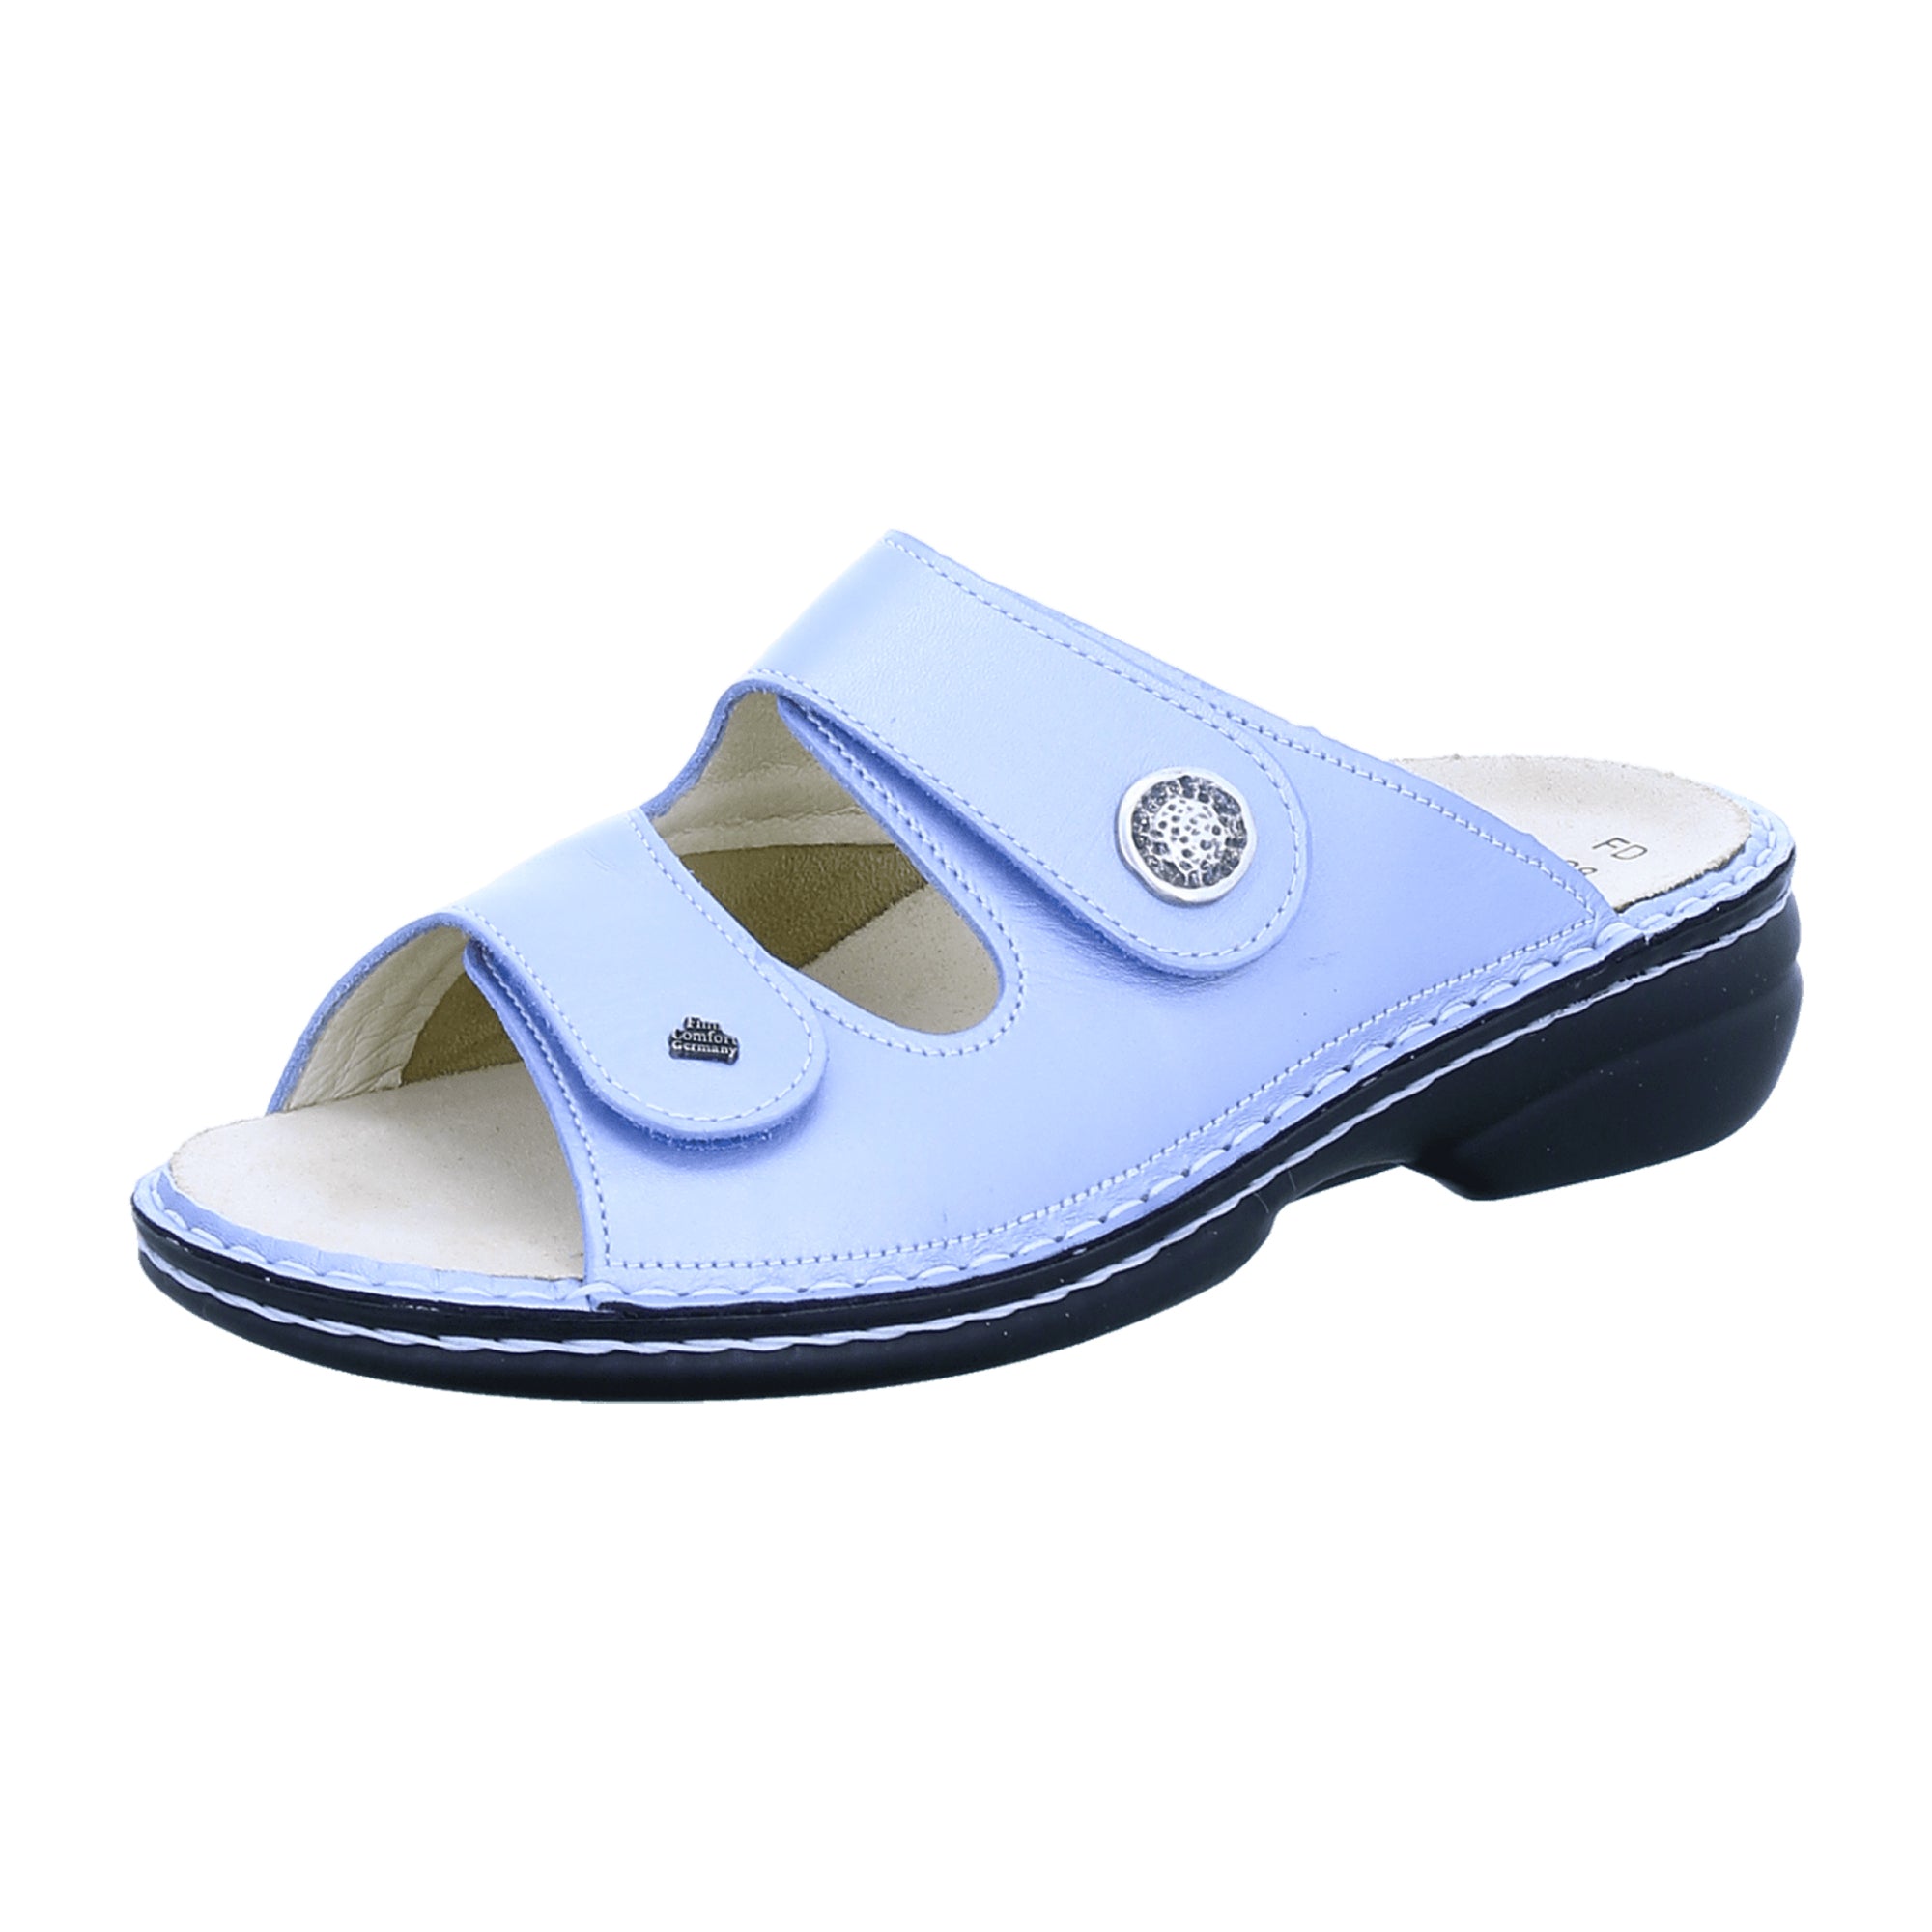 Finn Comfort Zeno Women's Comfortable Sandals, Stylish Blue - Orthopedic Support